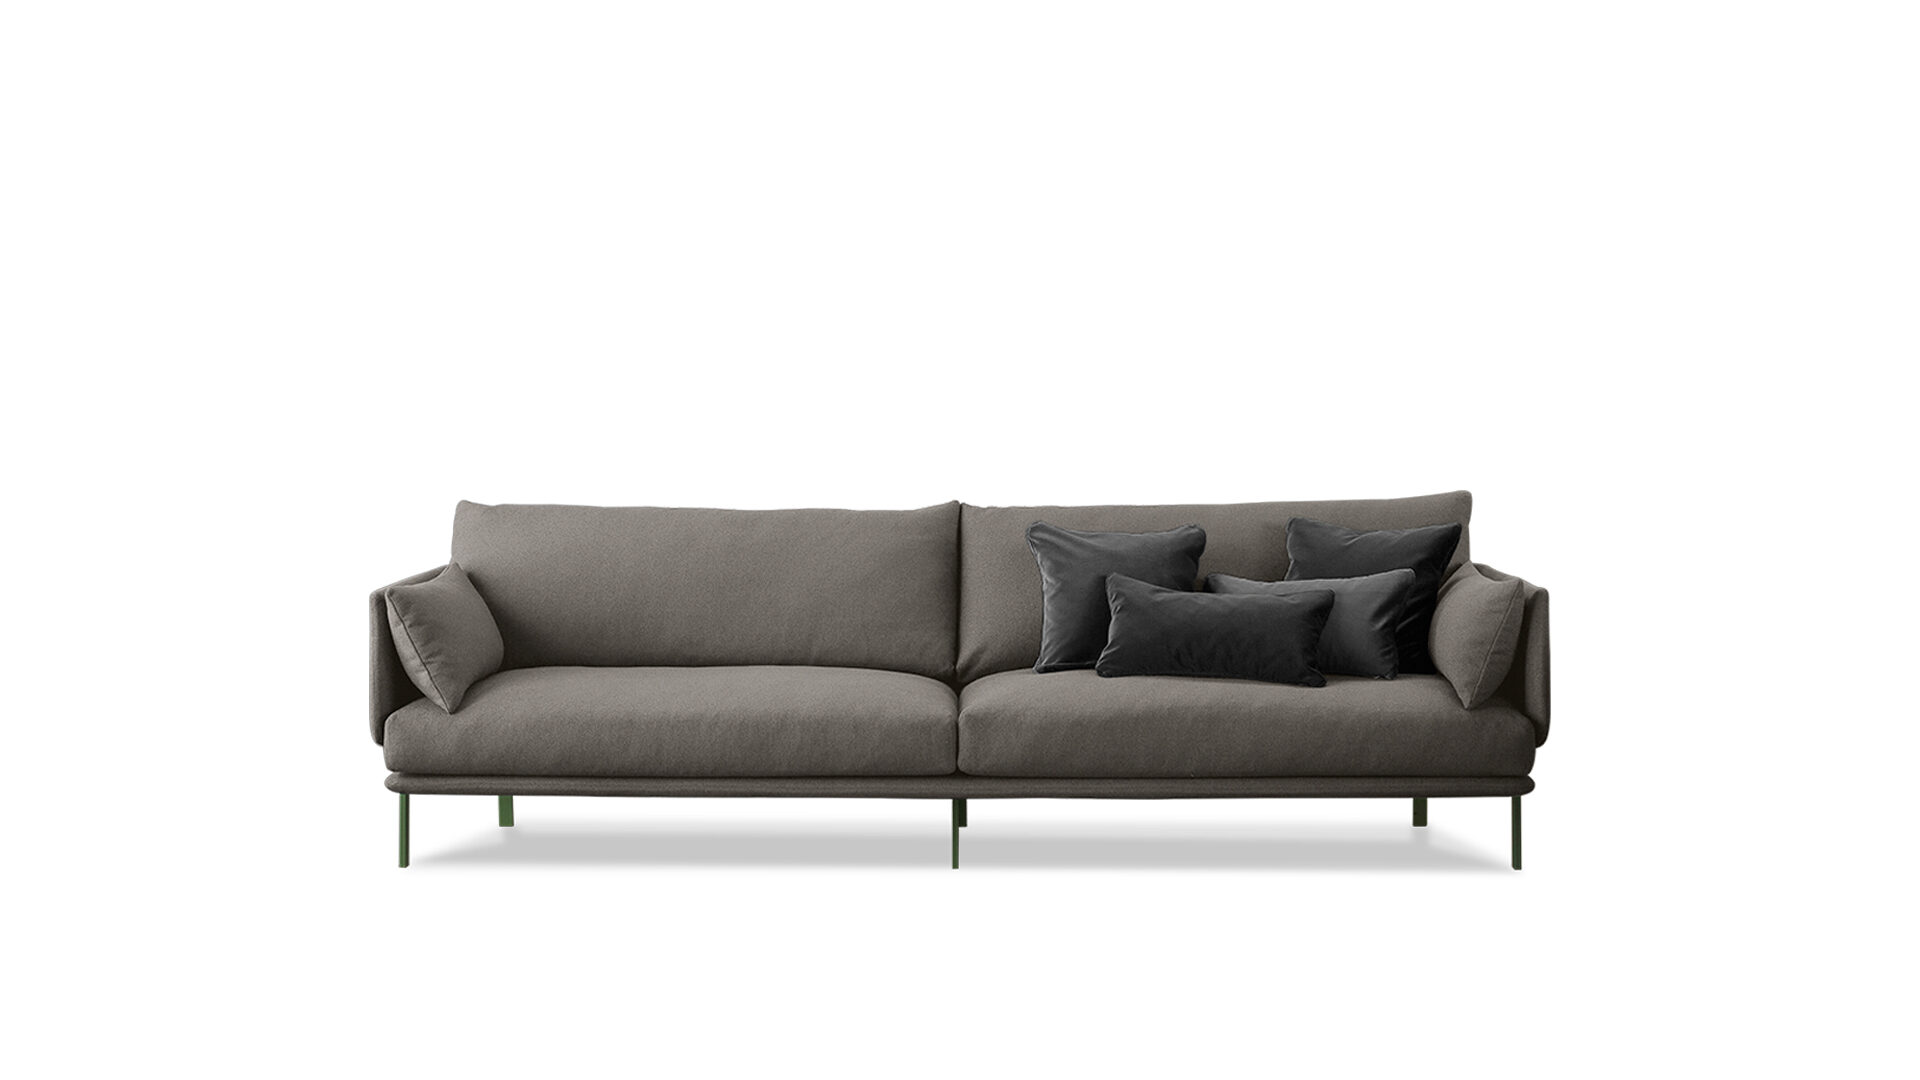 bonaldo-divani-structure-sofa-foto-jpg